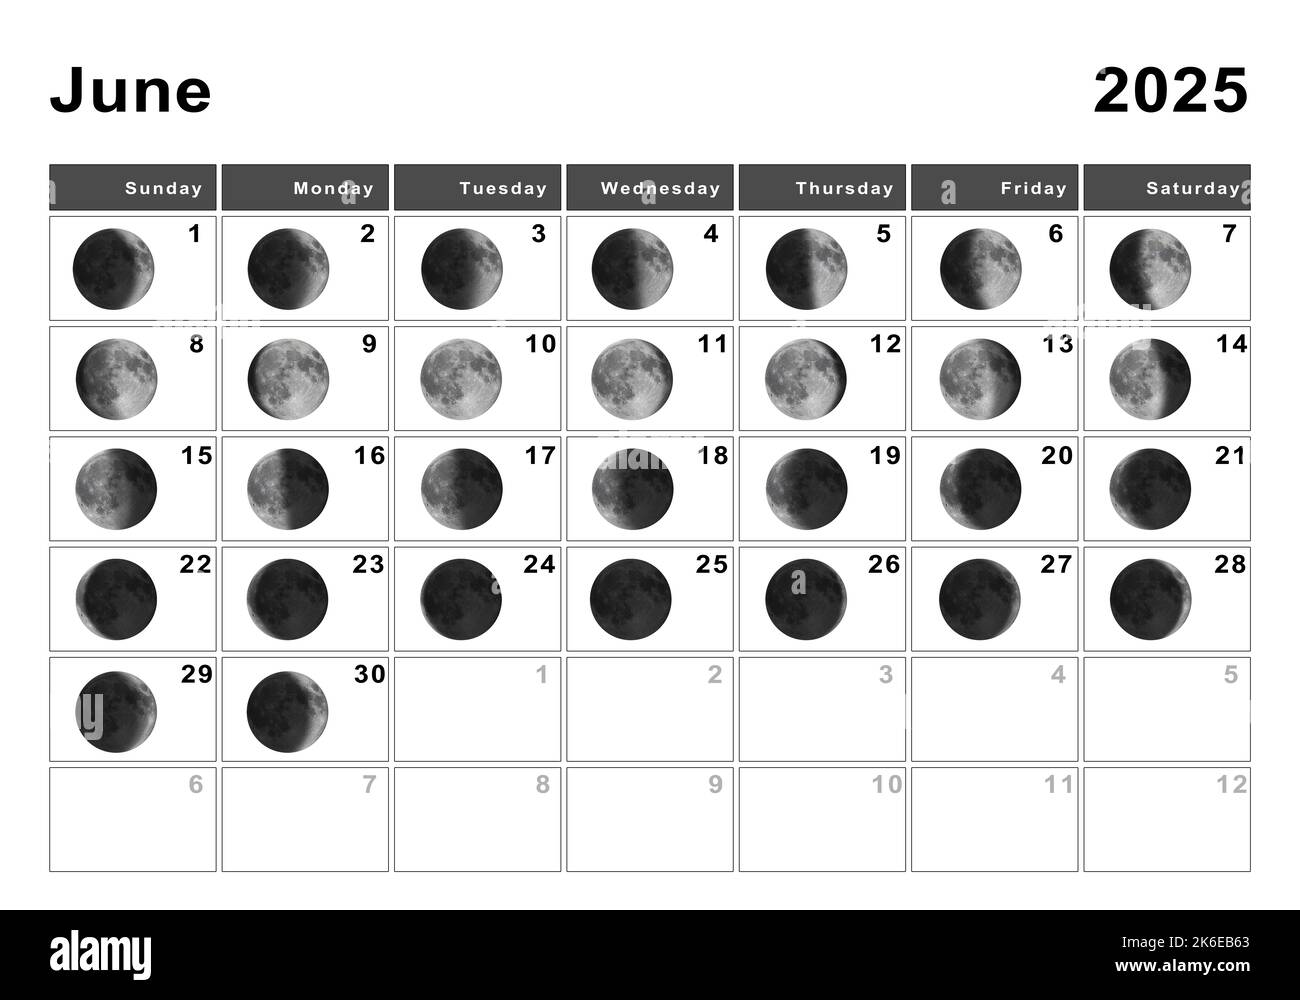 June 2025 Lunar Calendar Moon Cycles Moon Phases Stock Photo Alamy